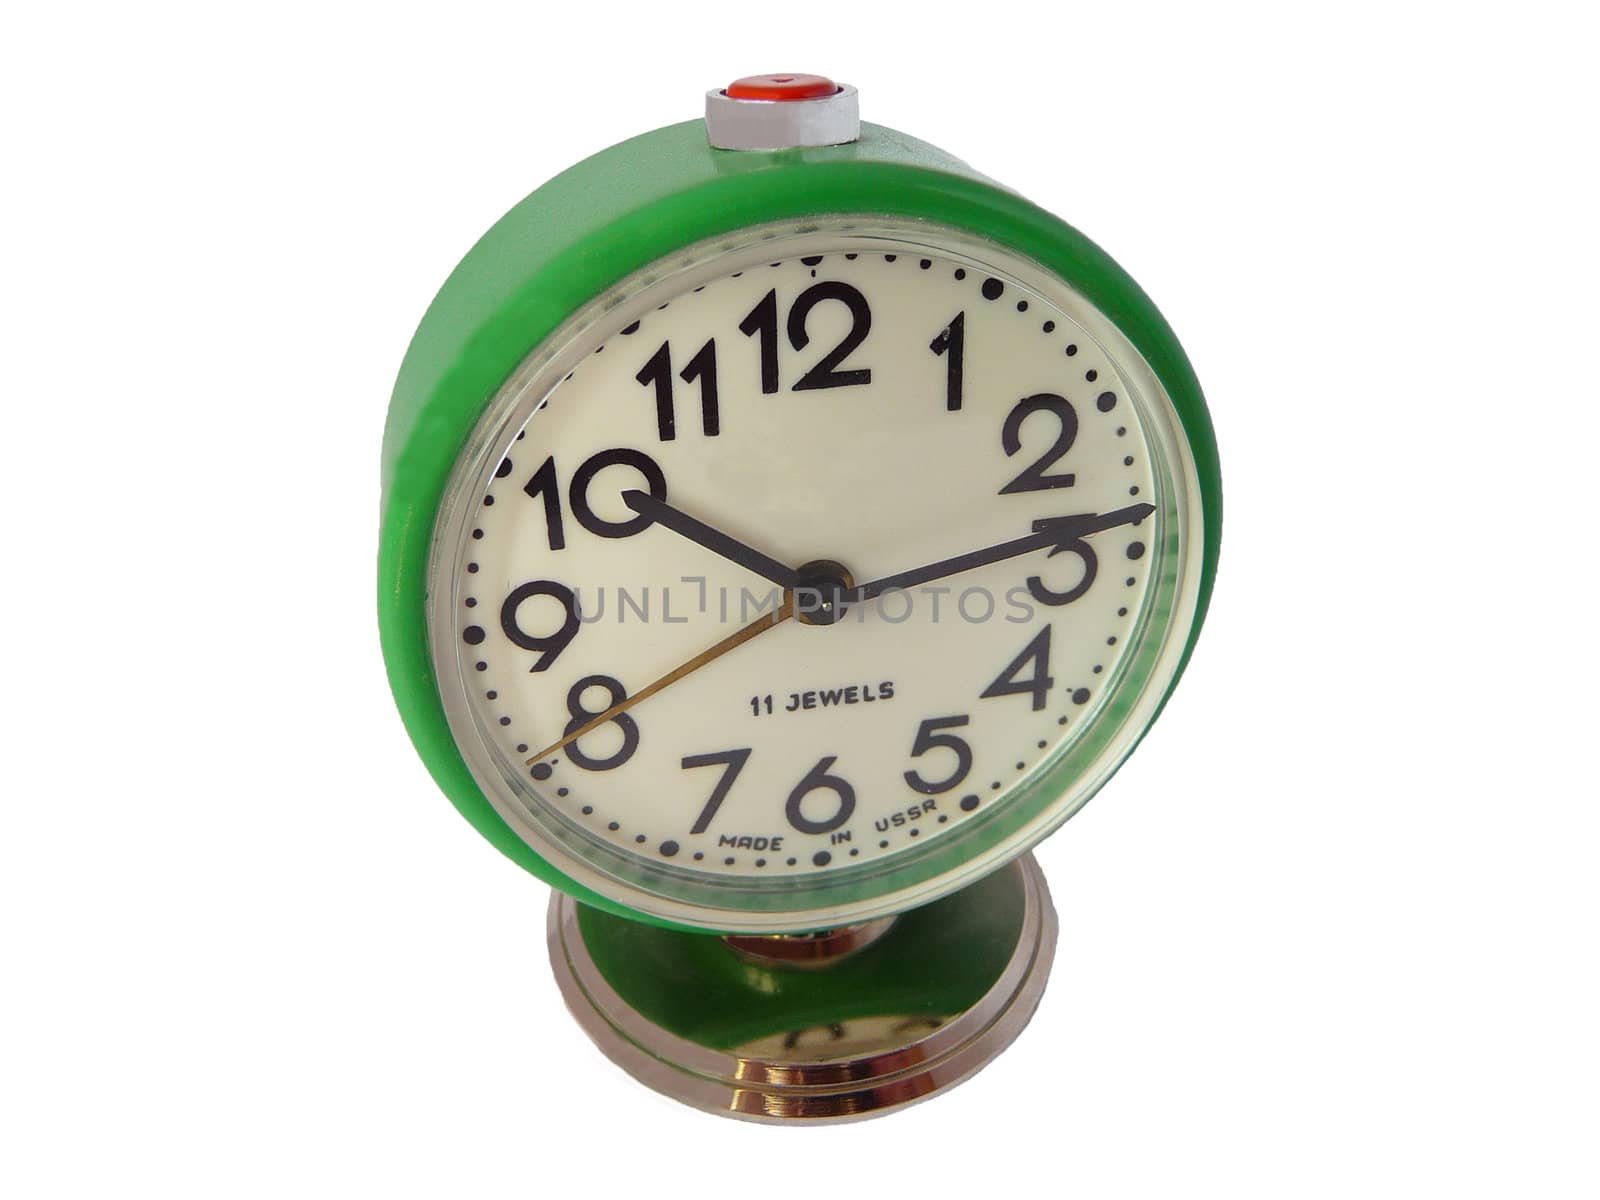 A mechanical clock is an alarm clock